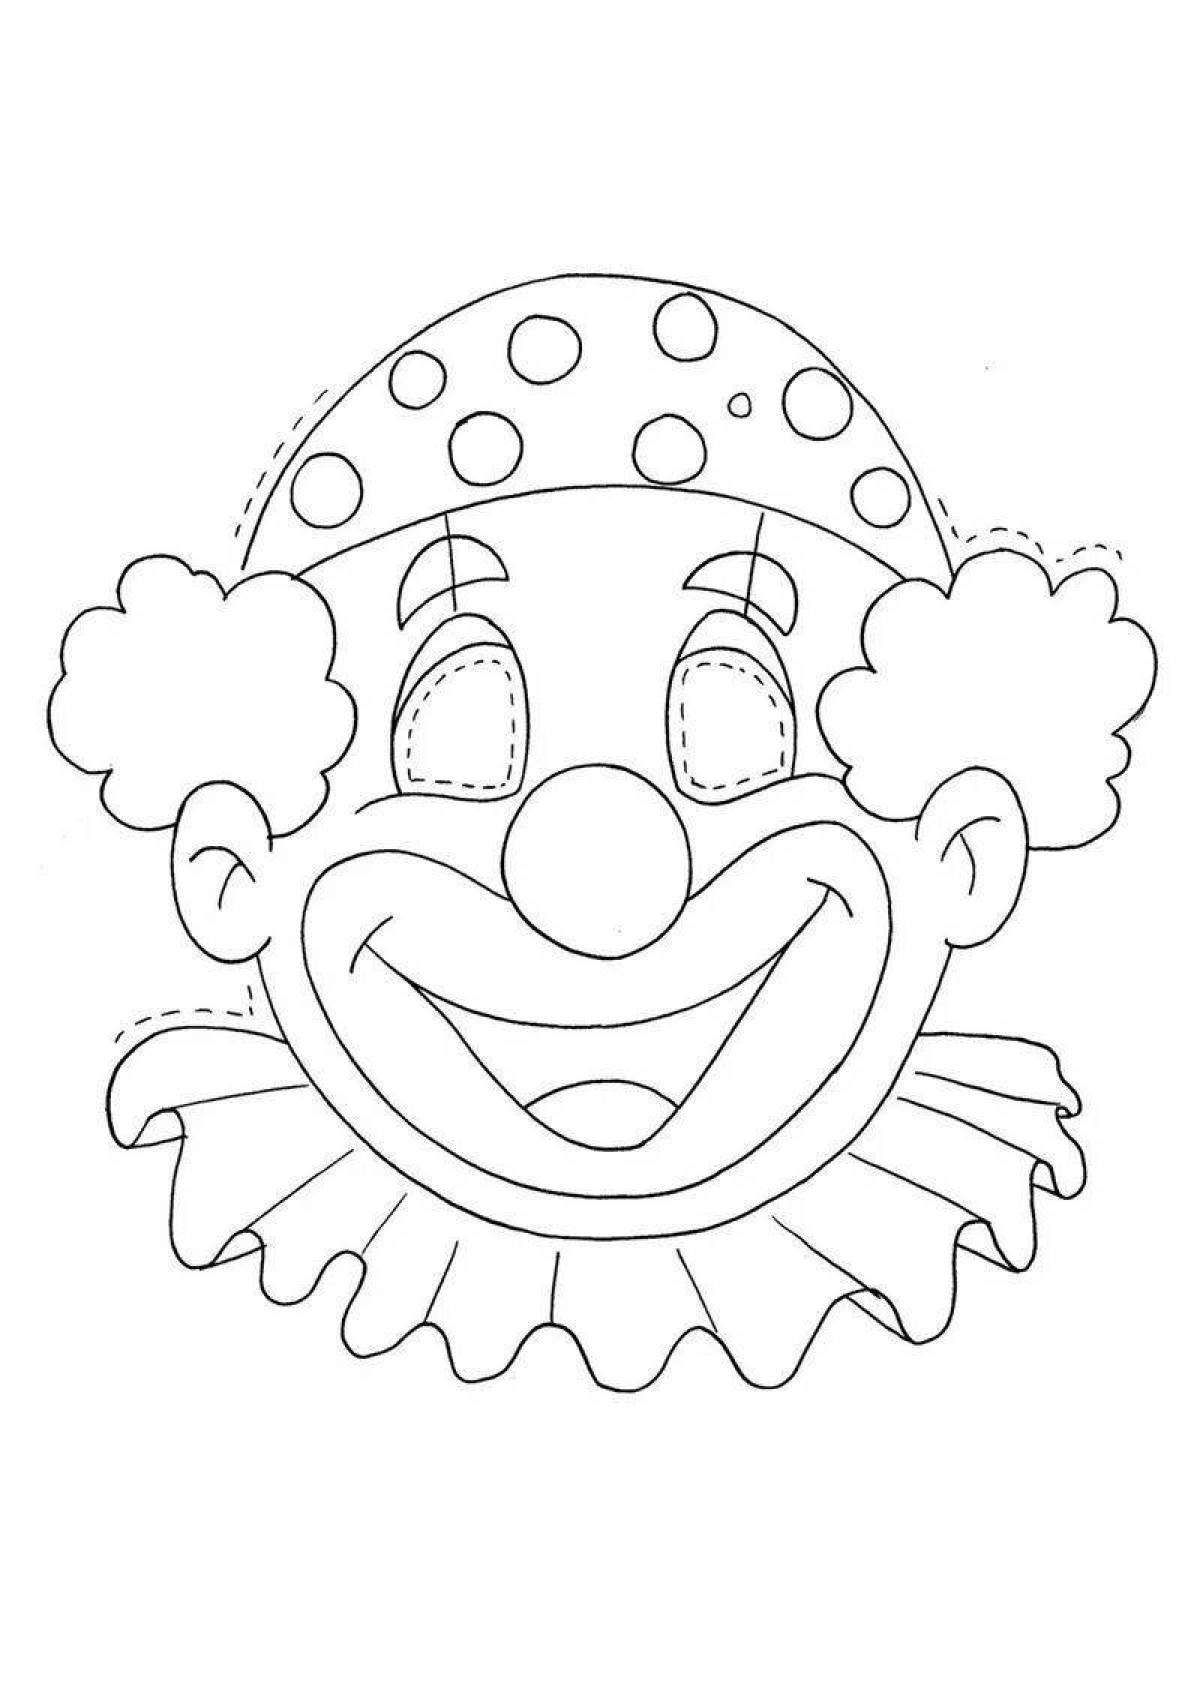 Шаблон маски клоуна распечатать. Клоун раскраска. Клоун шаблон. Лицо клоуна раскраска. Маски клоуна для детей.